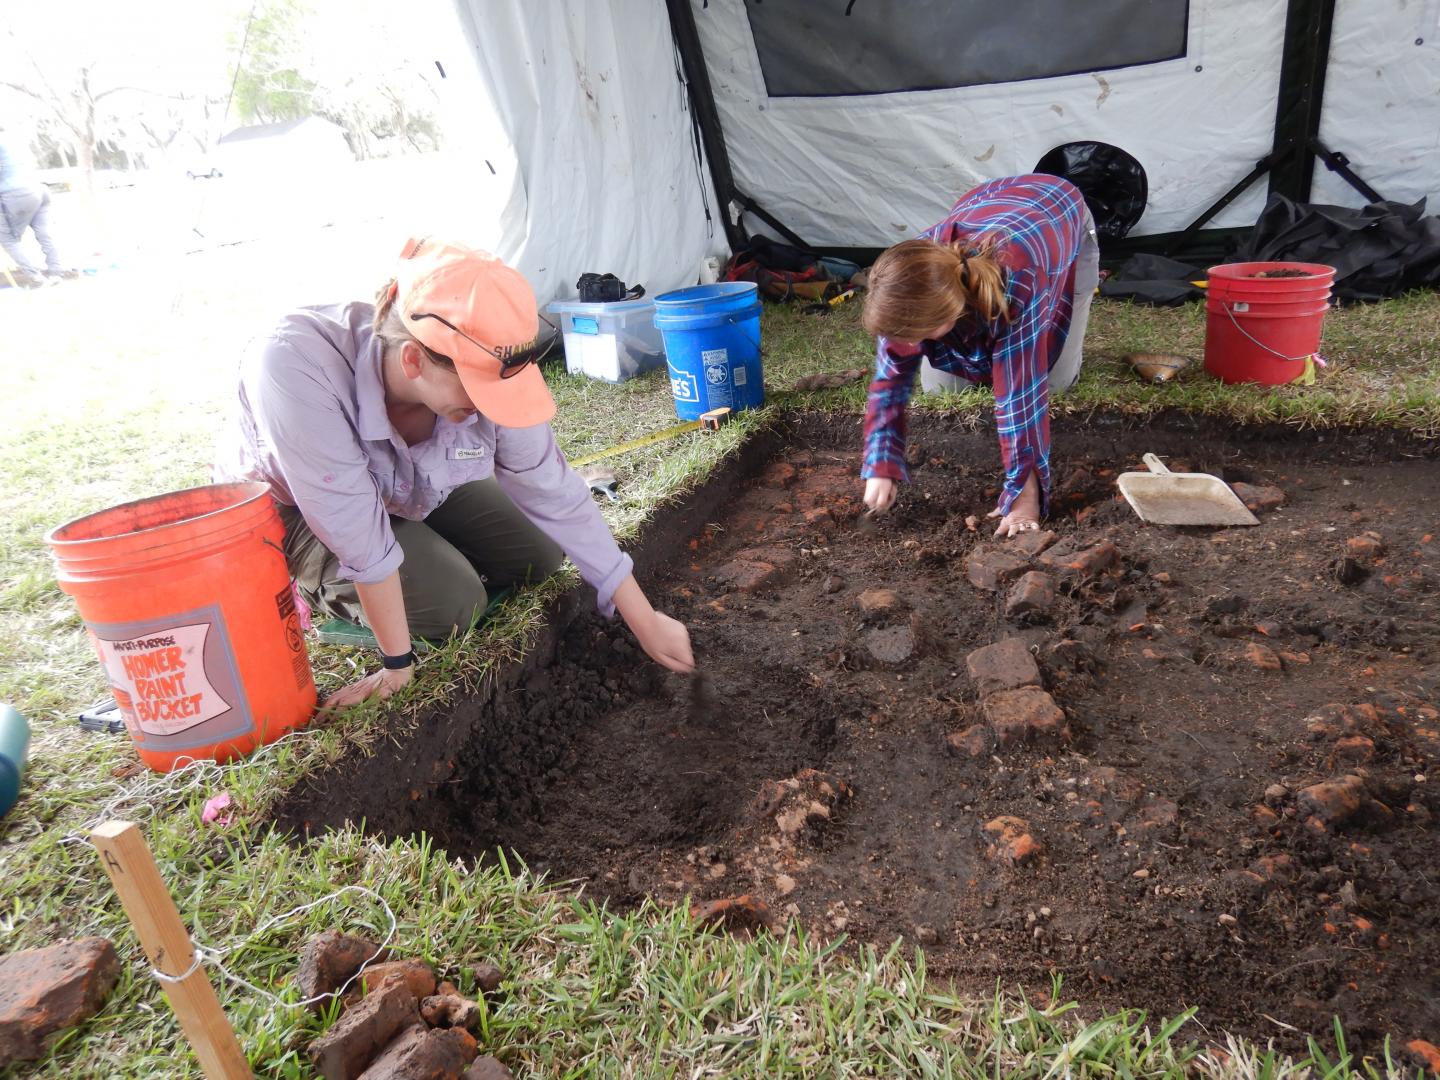 IMAGE 1 - Archaeologists doing fieldwork